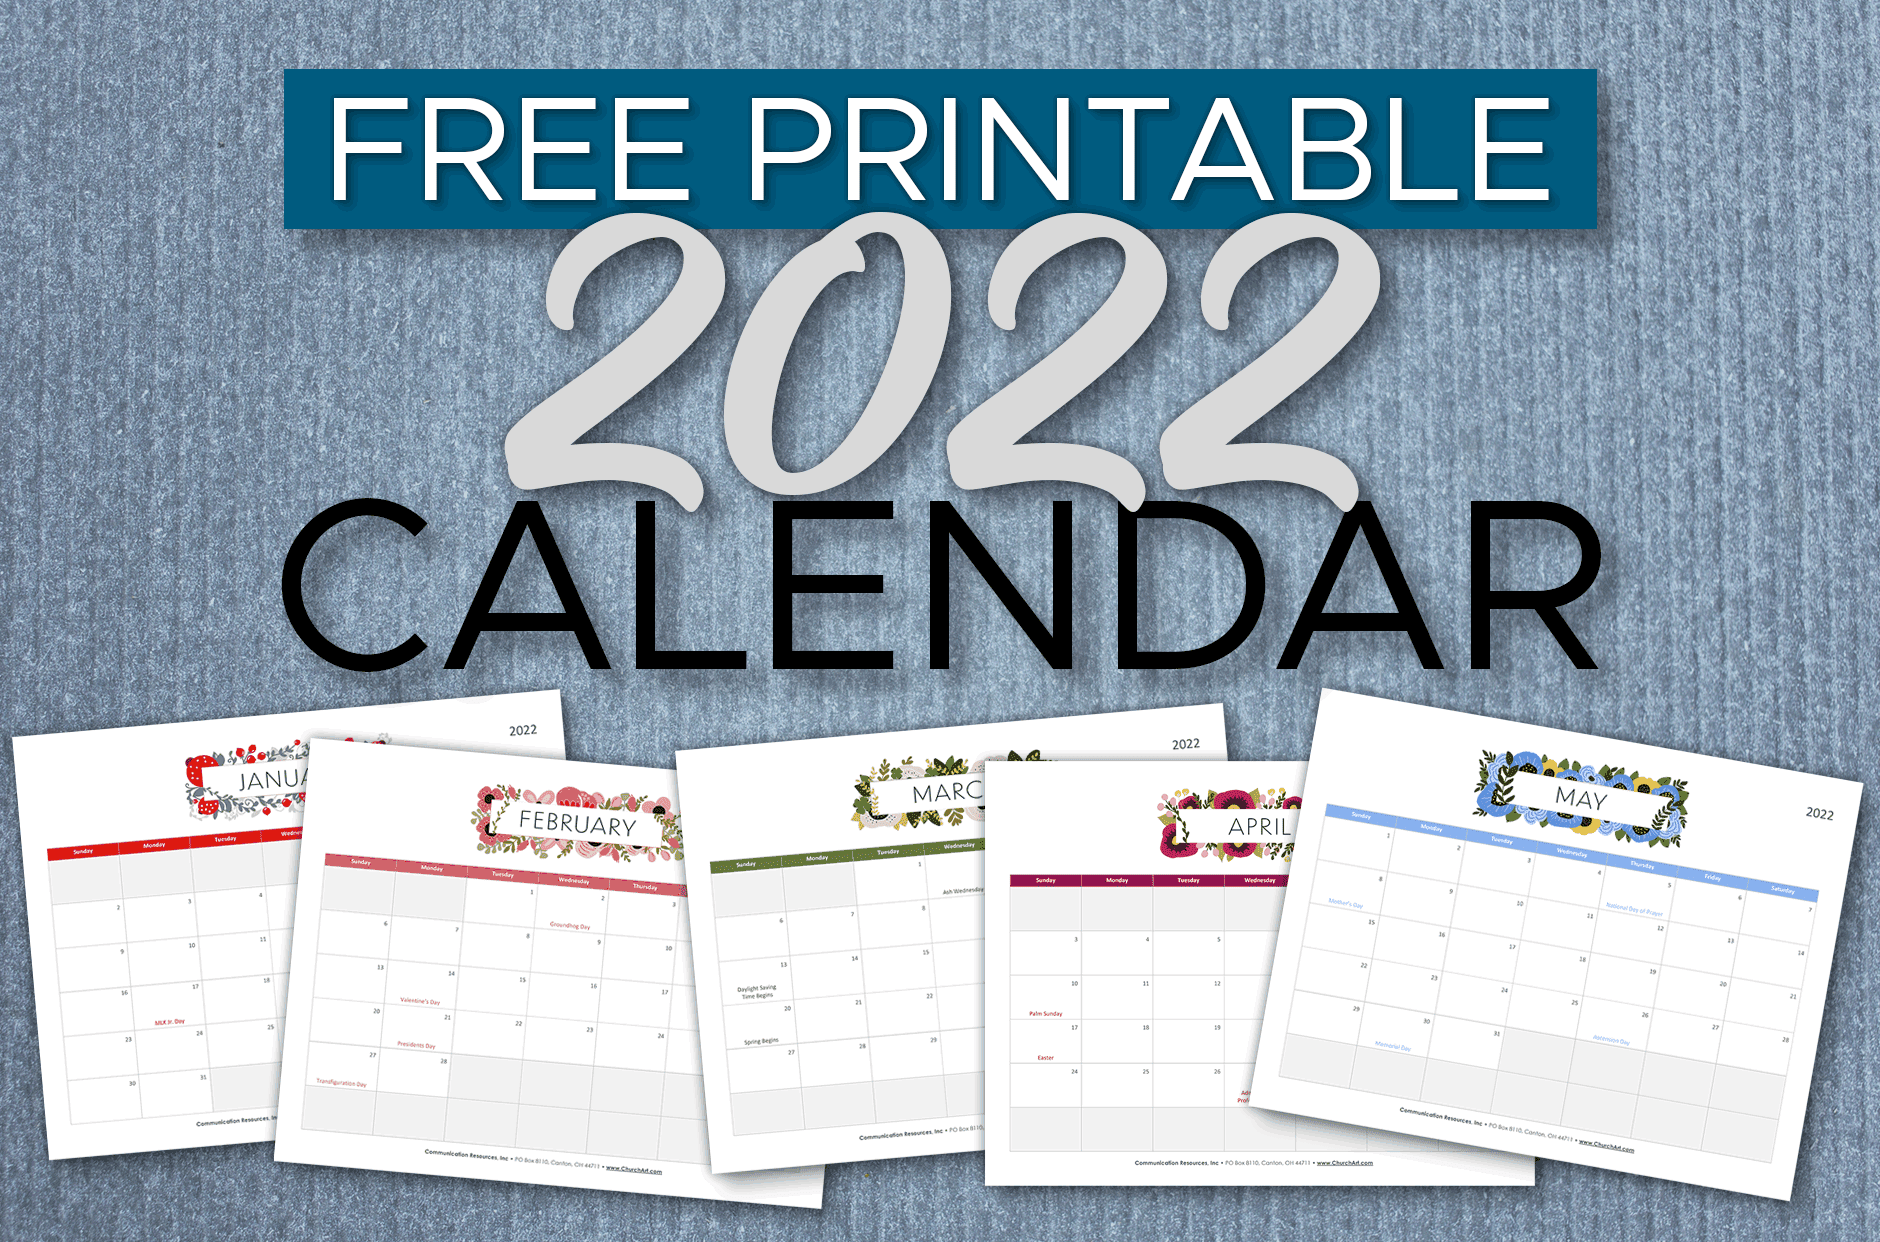 Free Printable Calendar 2022 Free Printable 2022 Church Calendar | Churchart.com Blog